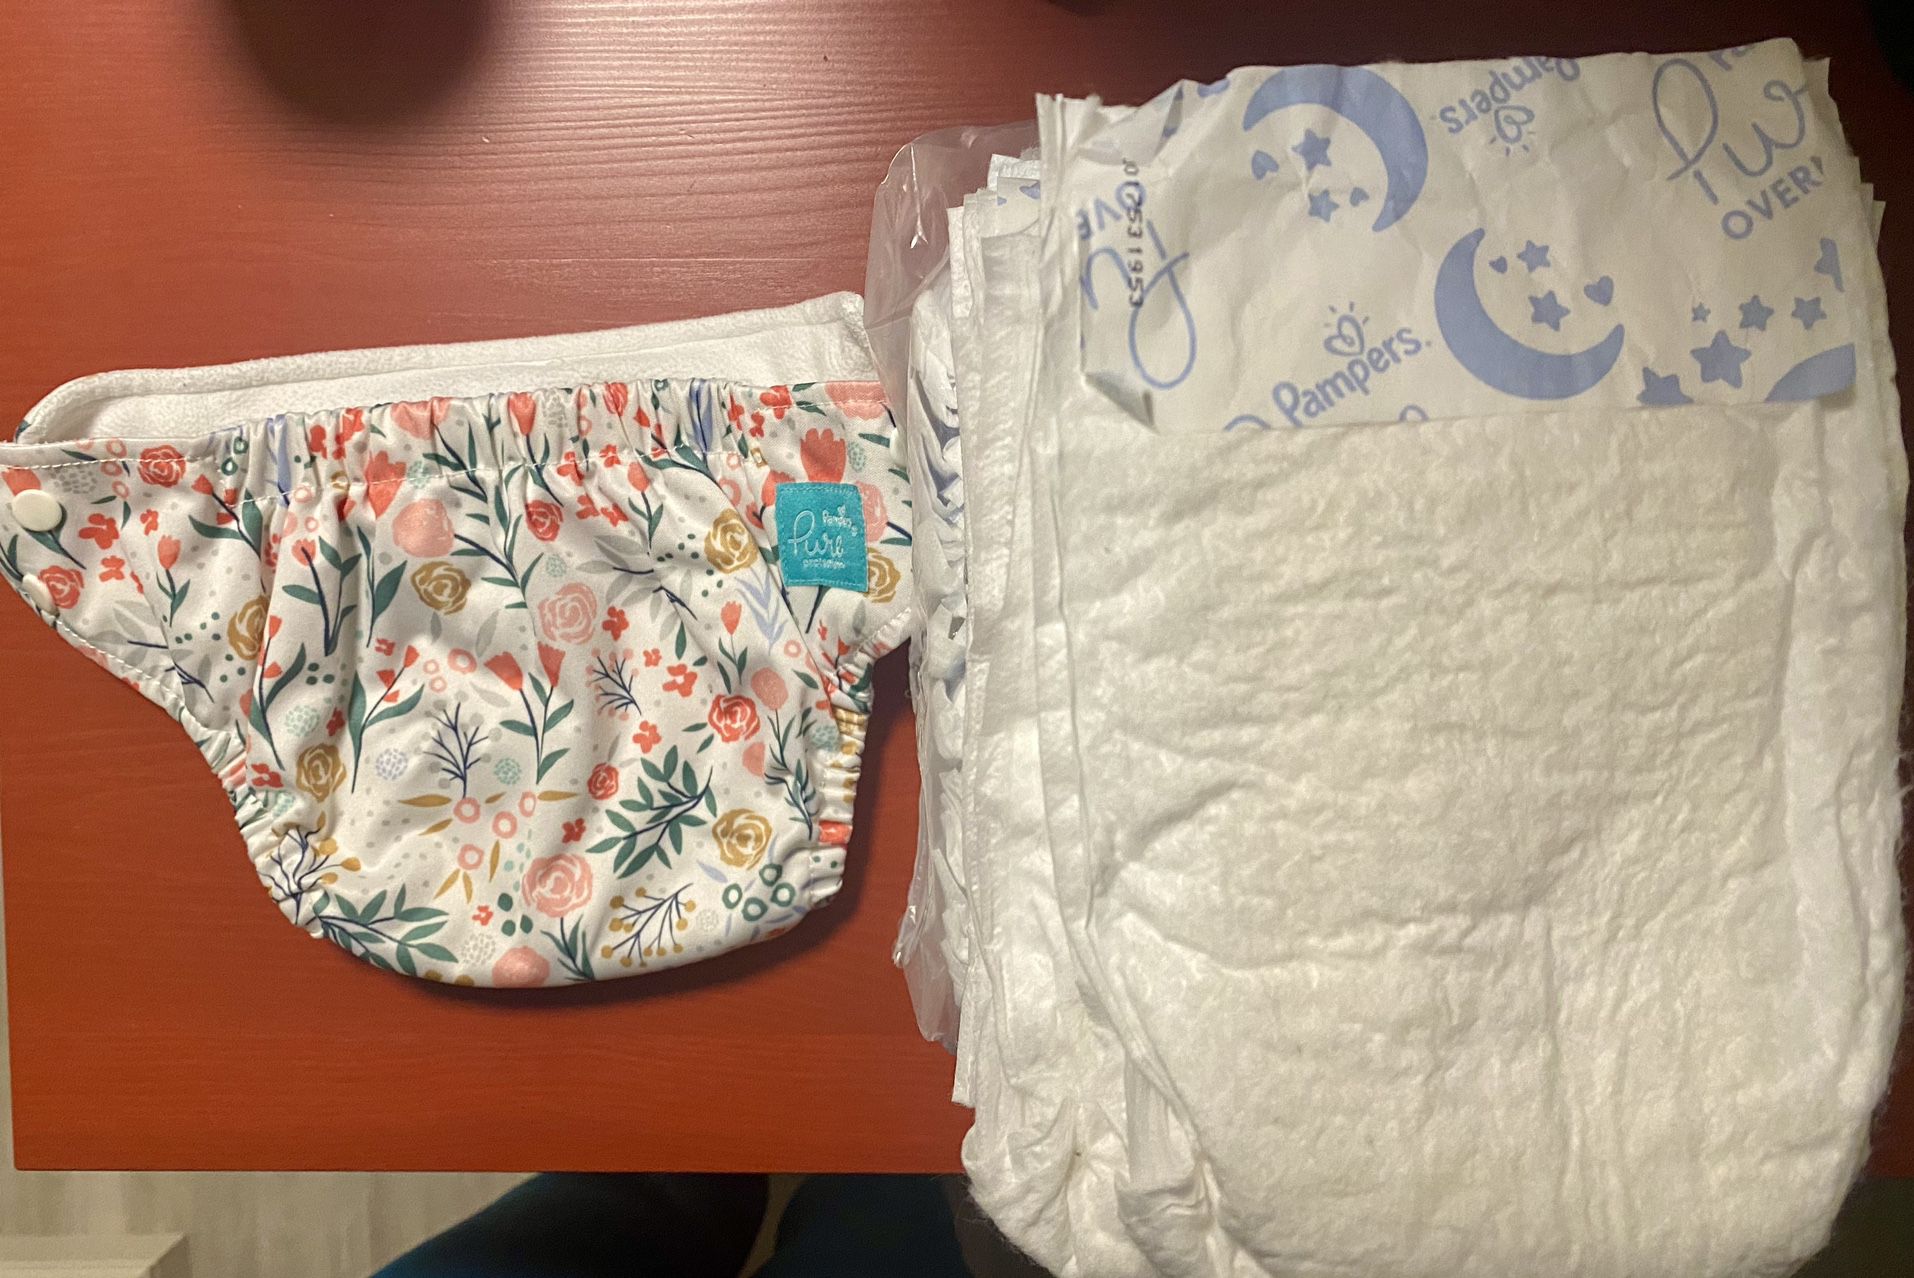 Pampers hybrid diaper